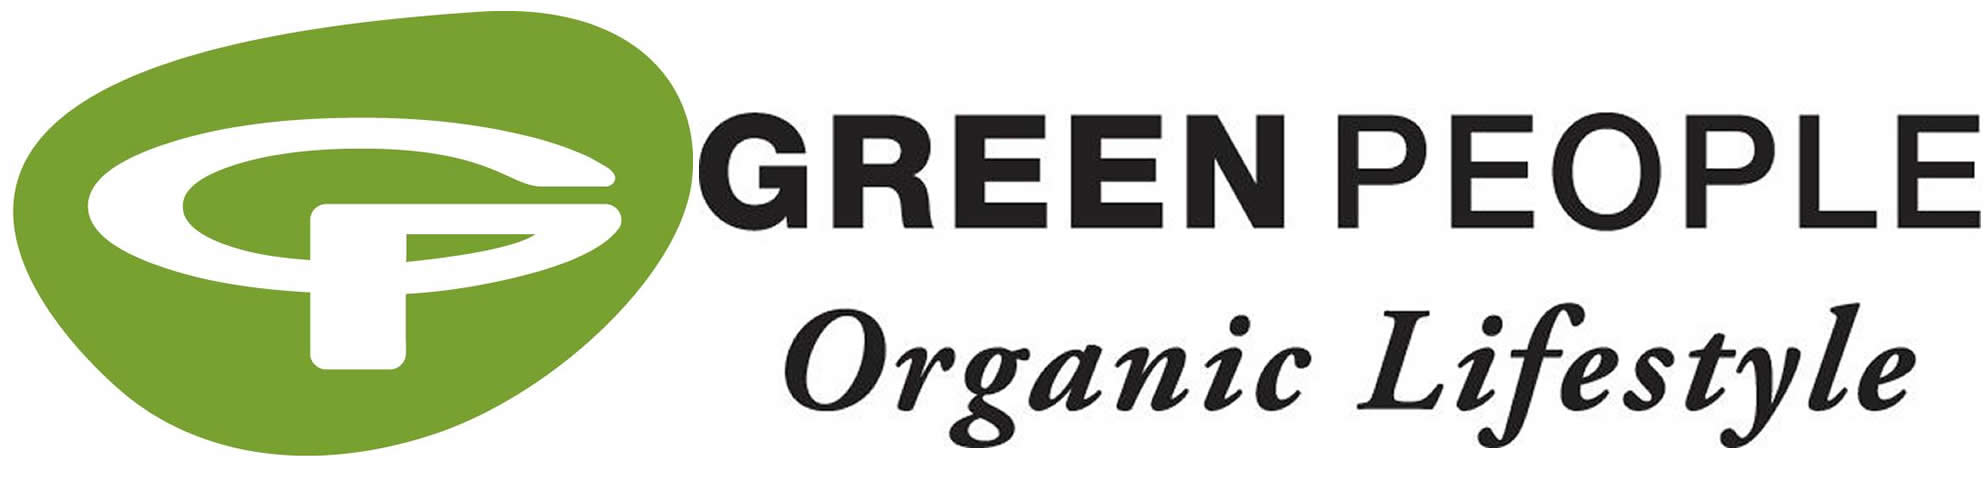 green people logo 2